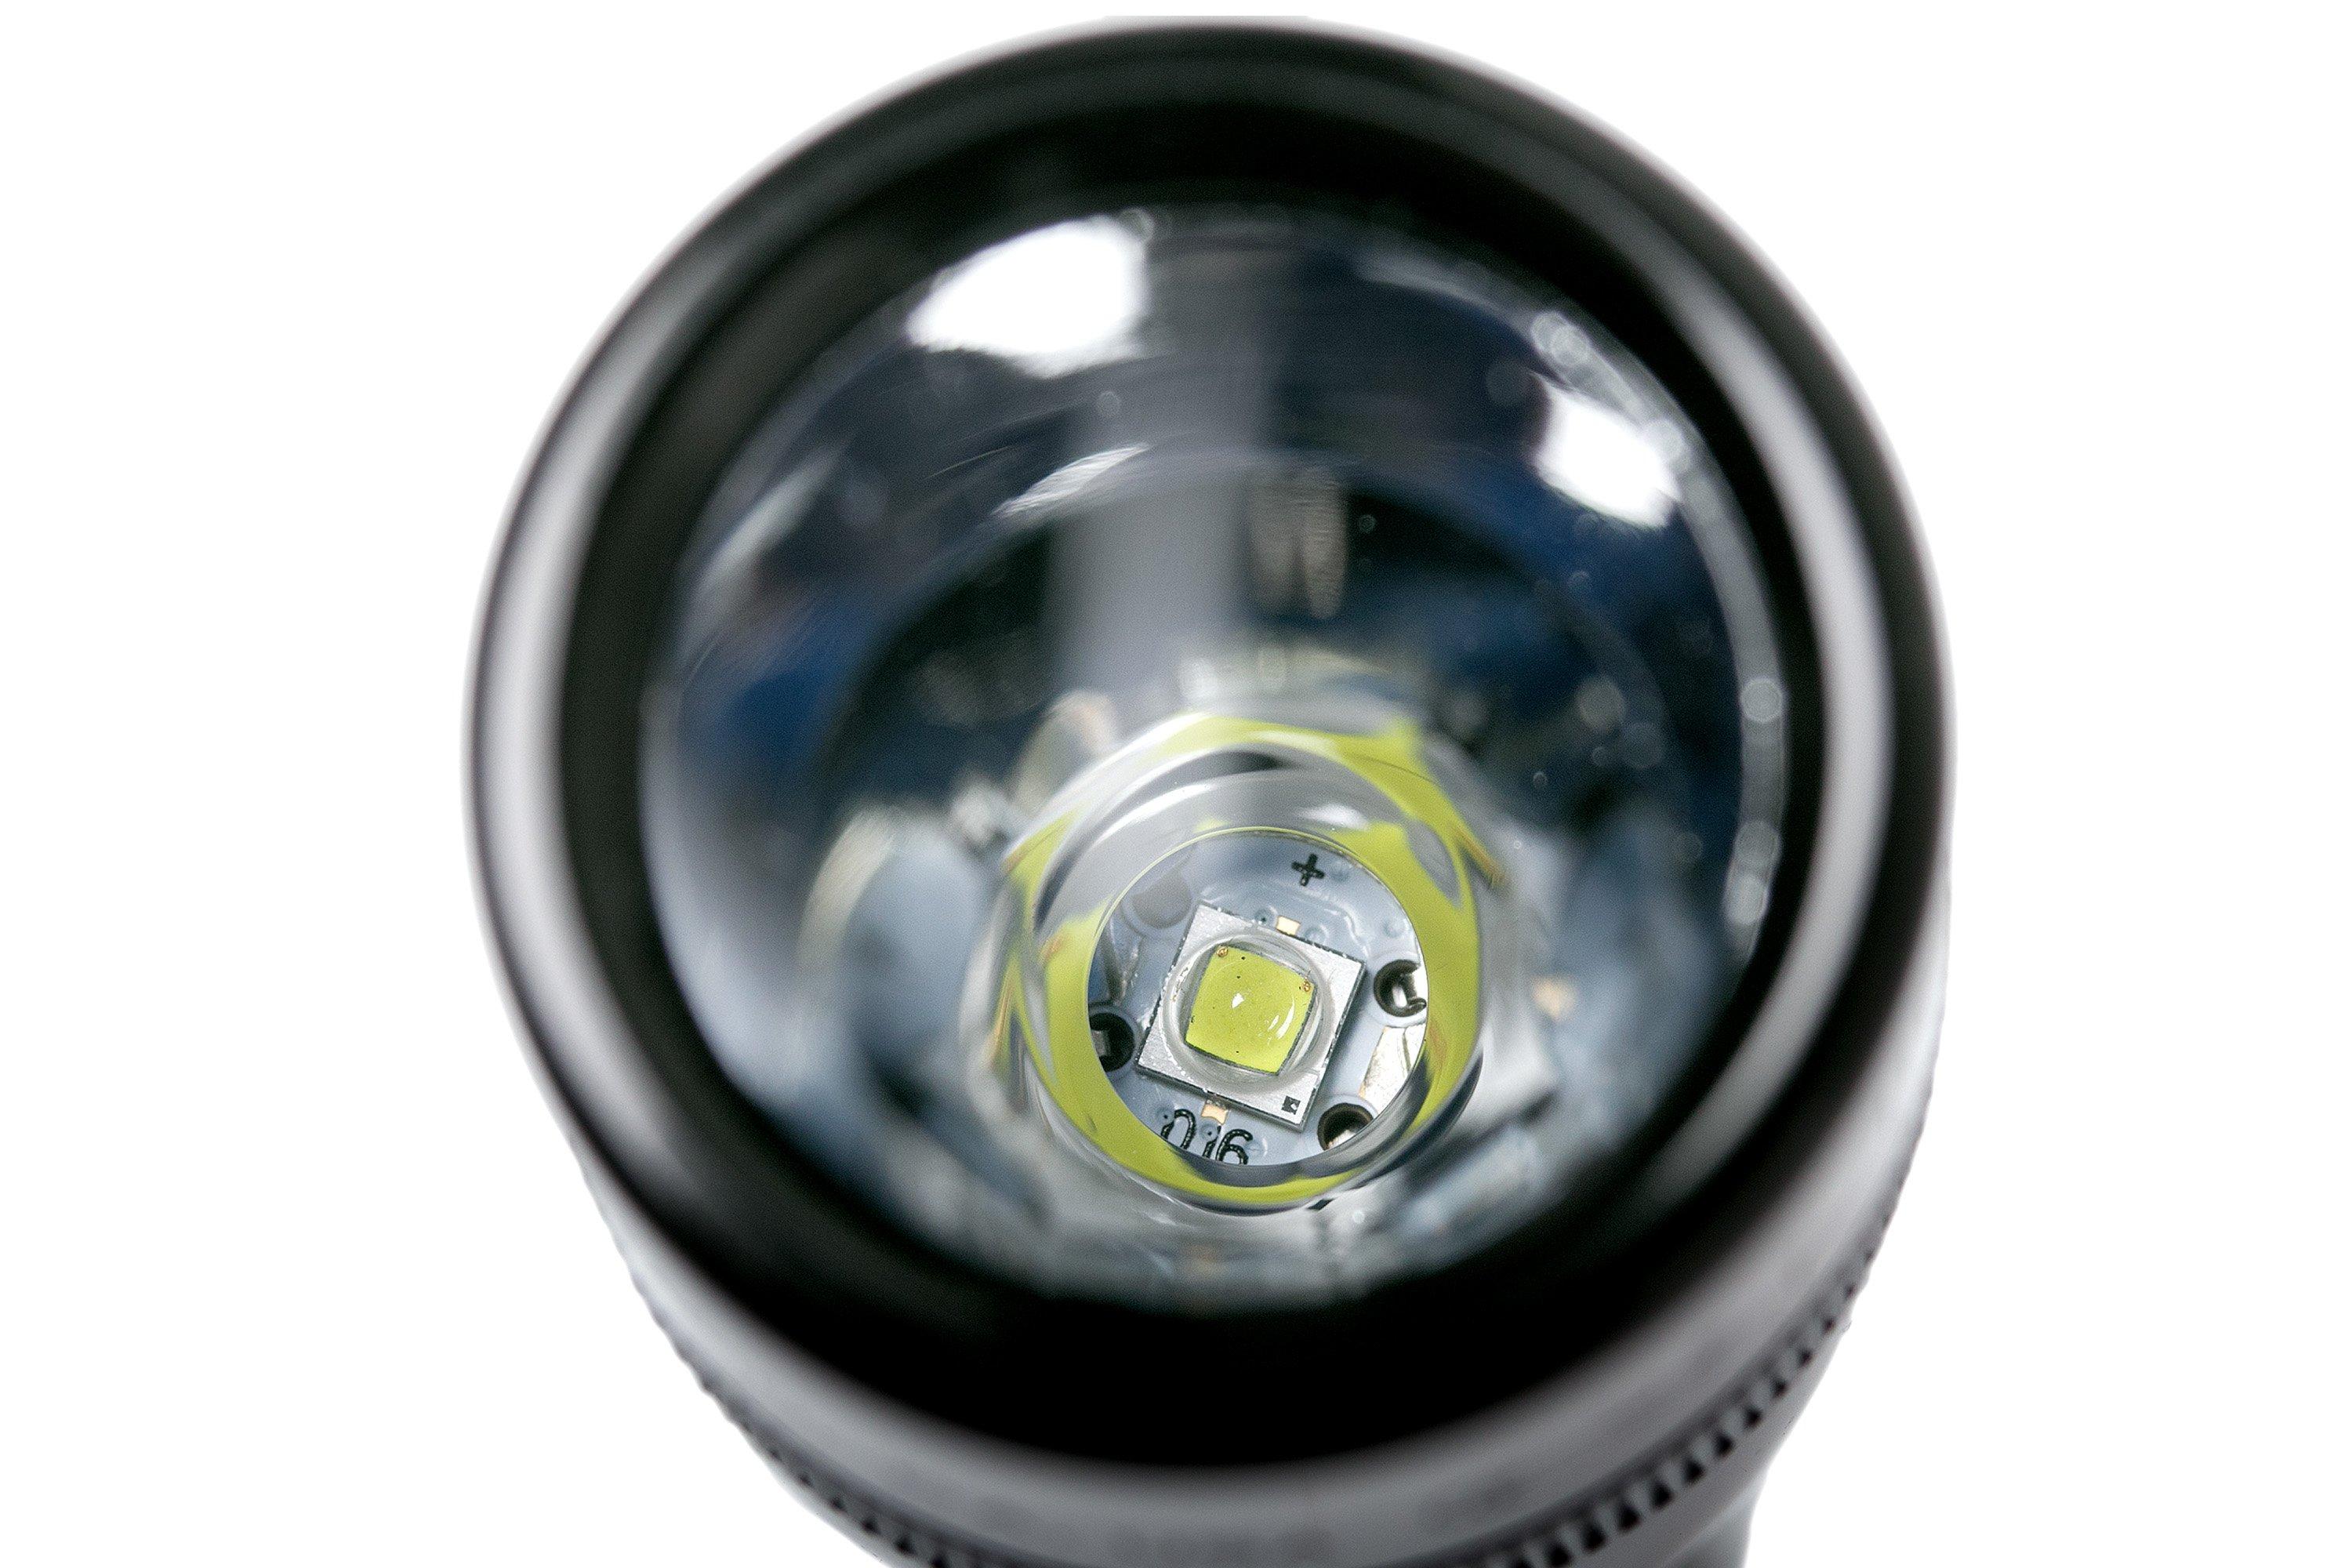 Magliteᴹᴰ – Mini-lampe de poche à DEL – Noir H-4041BL - Uline